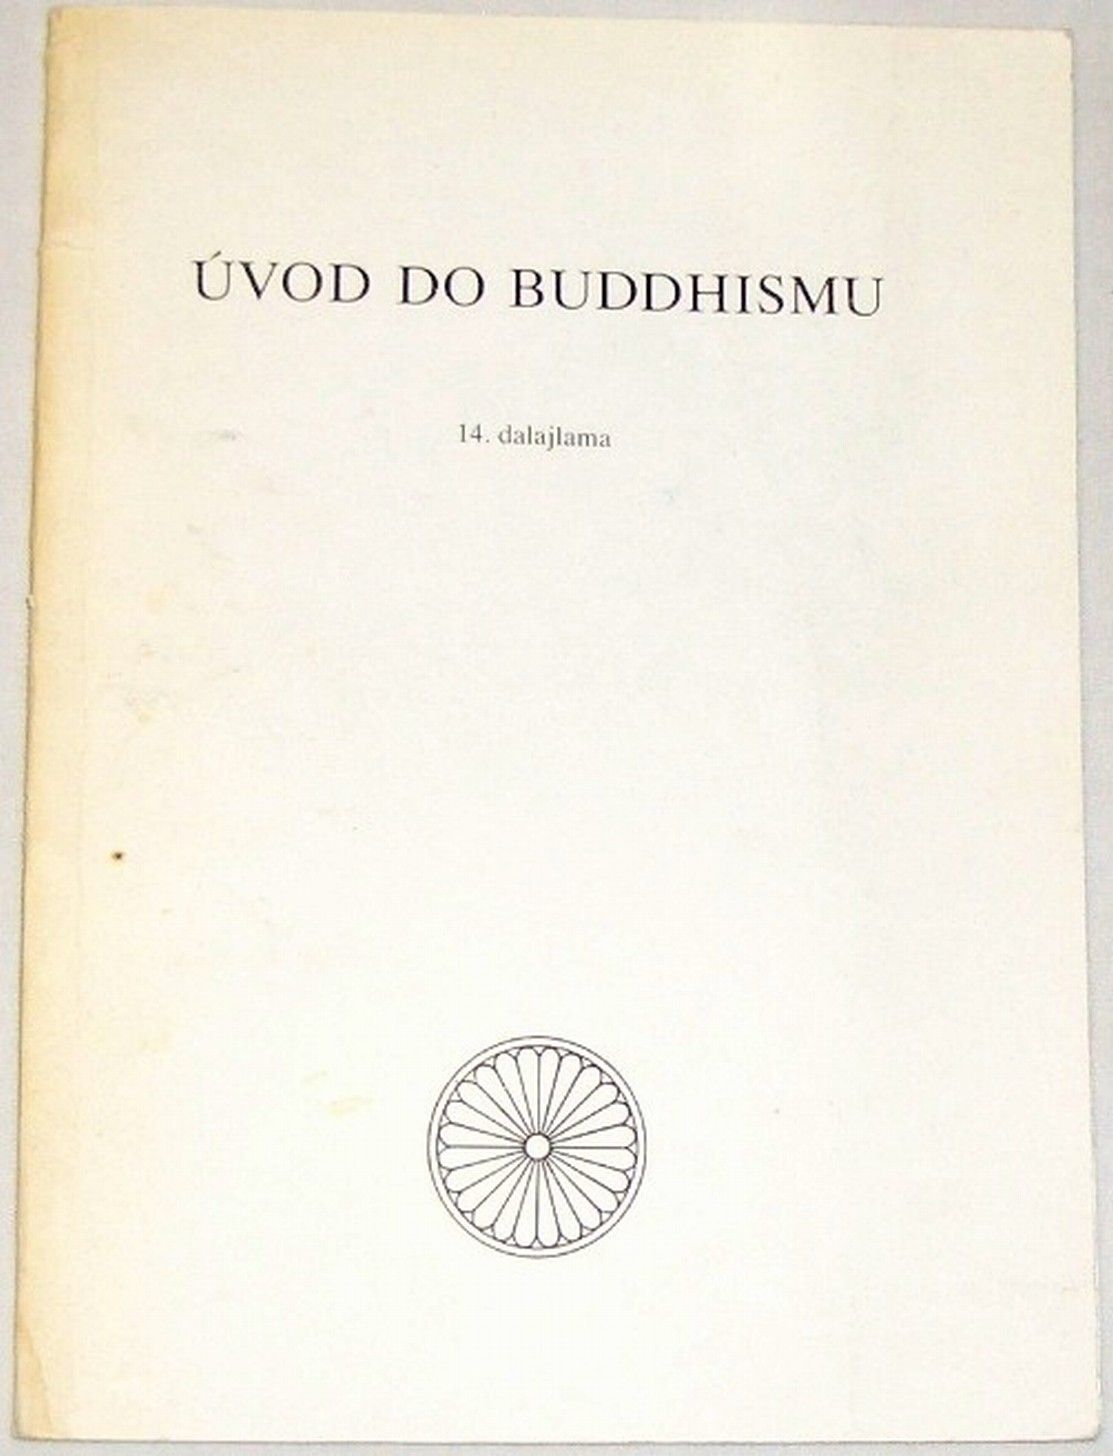 14. dalajlama Tändzin Gjamccho - Úvod do Buddhismu